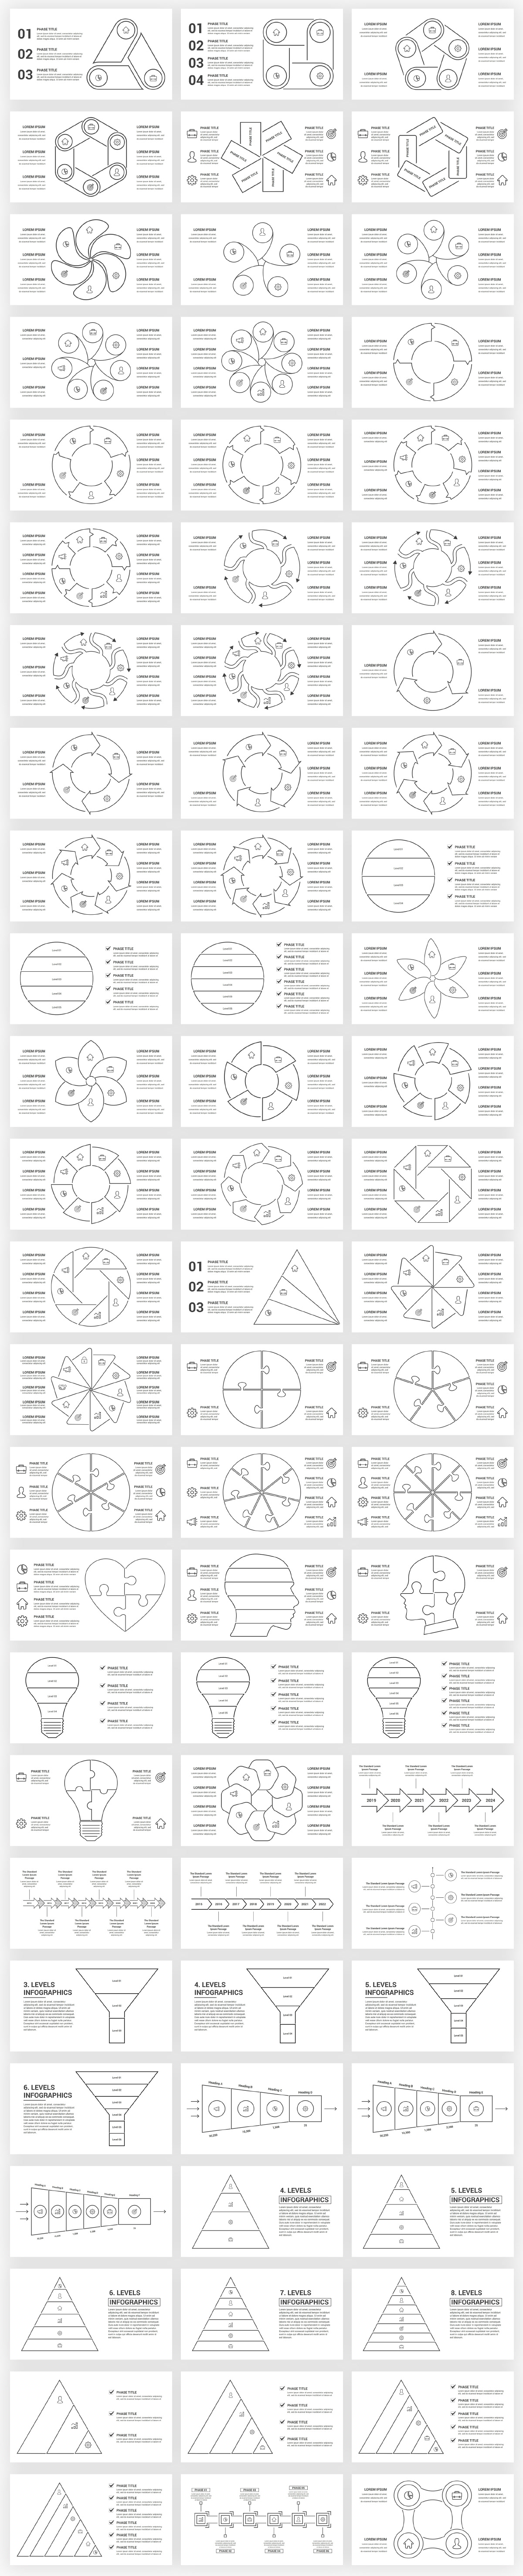 Infographics Complete Bundle PowerPoint Templates - 76